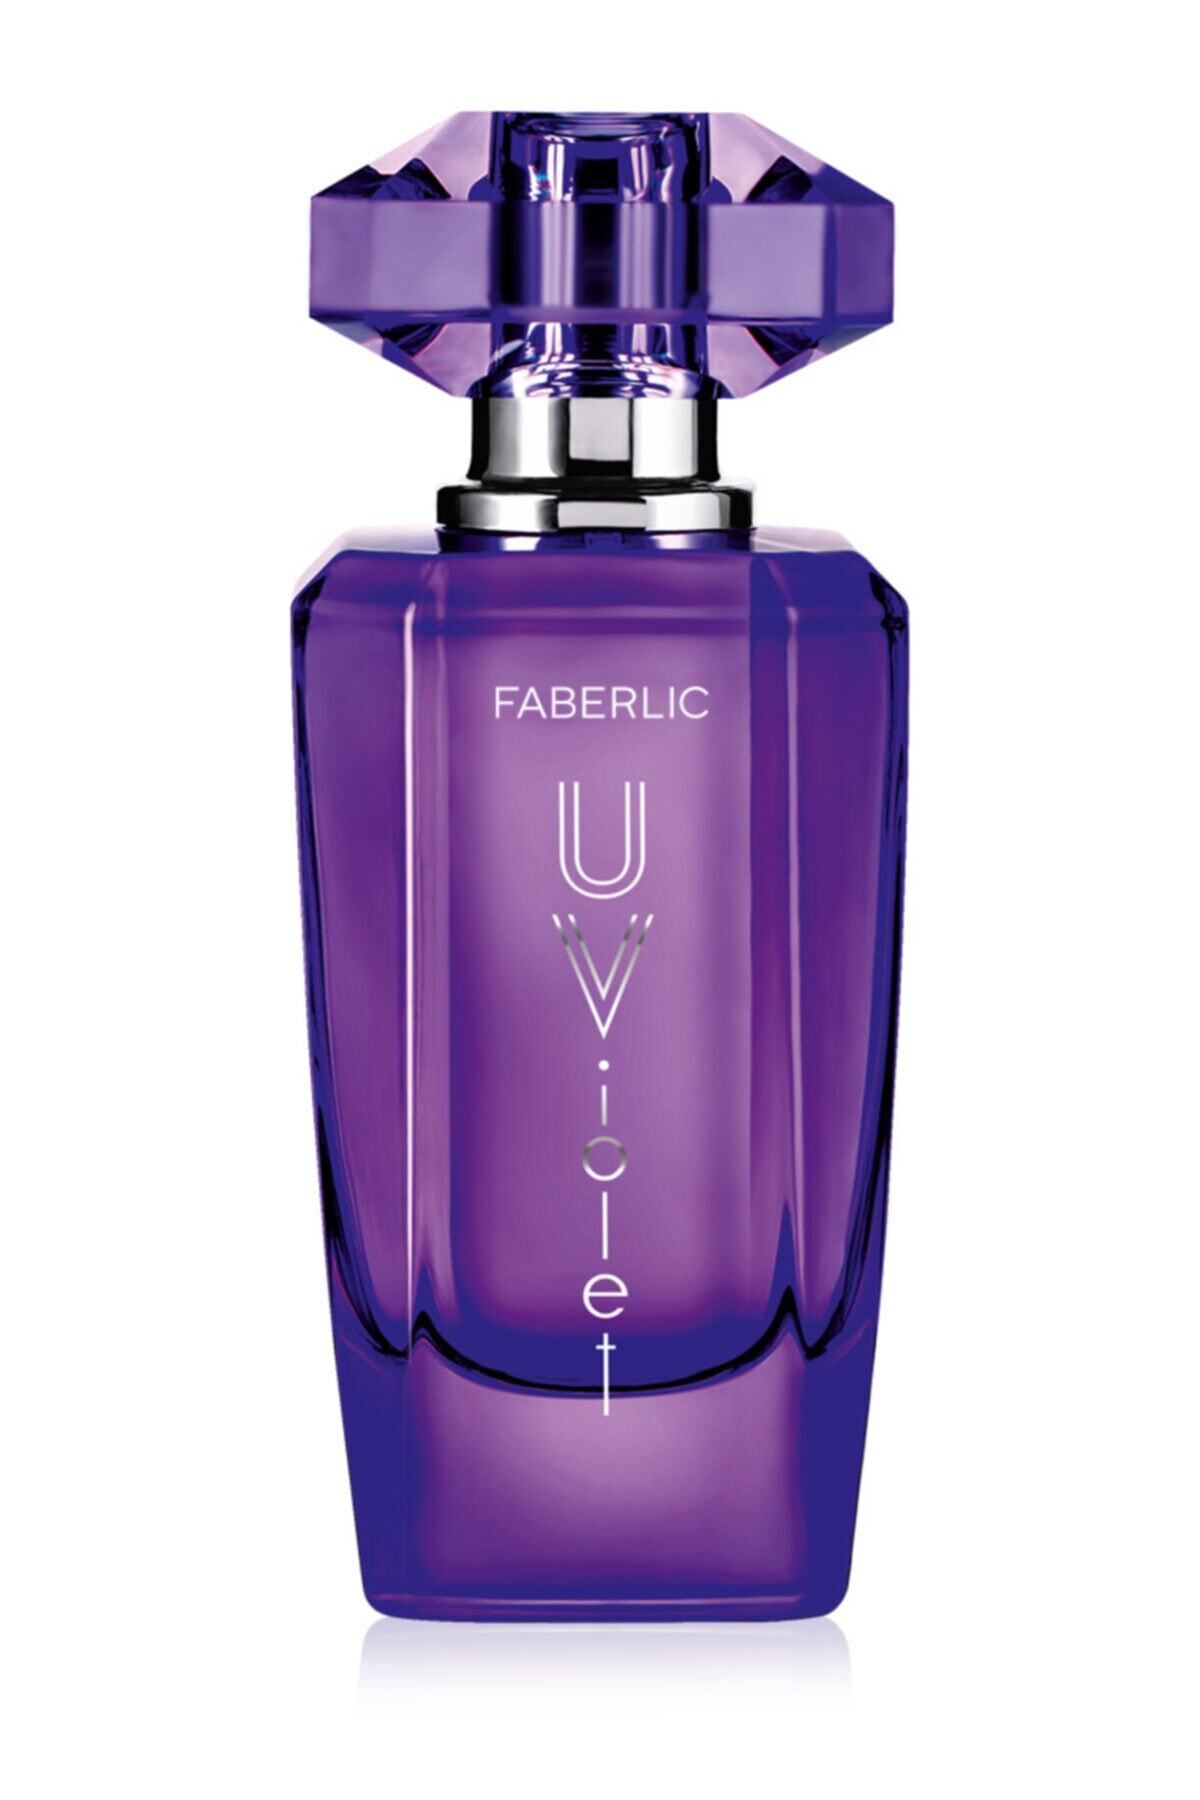 Faberlic Uviolet Kadın Parfüm Edp 50 ml 4690302291860